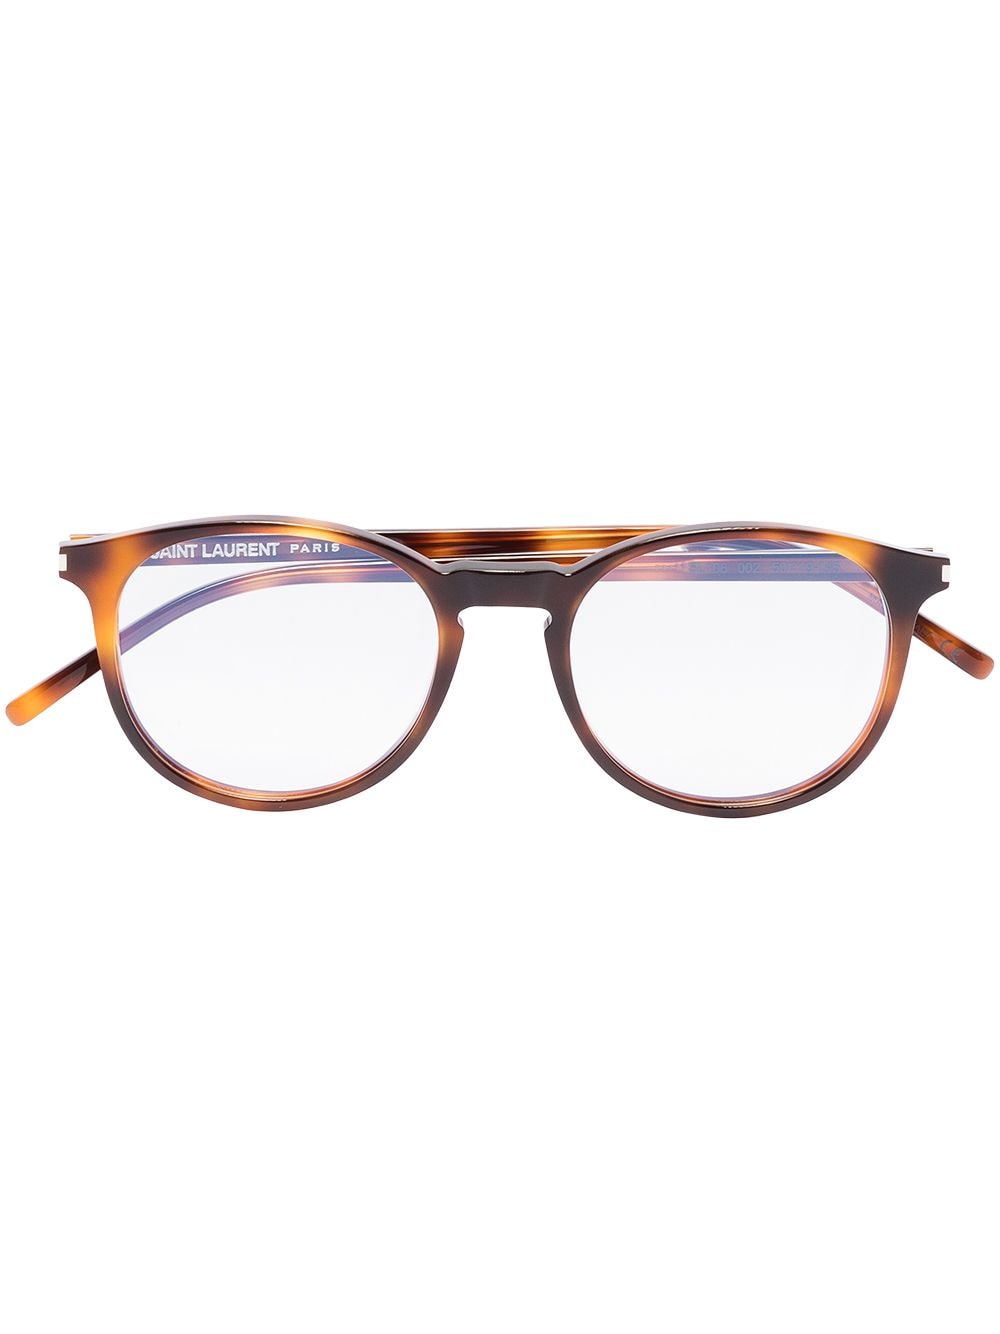 Saint Laurent Eyewear Round Tortoise Shell Optical Glasses Farfetch